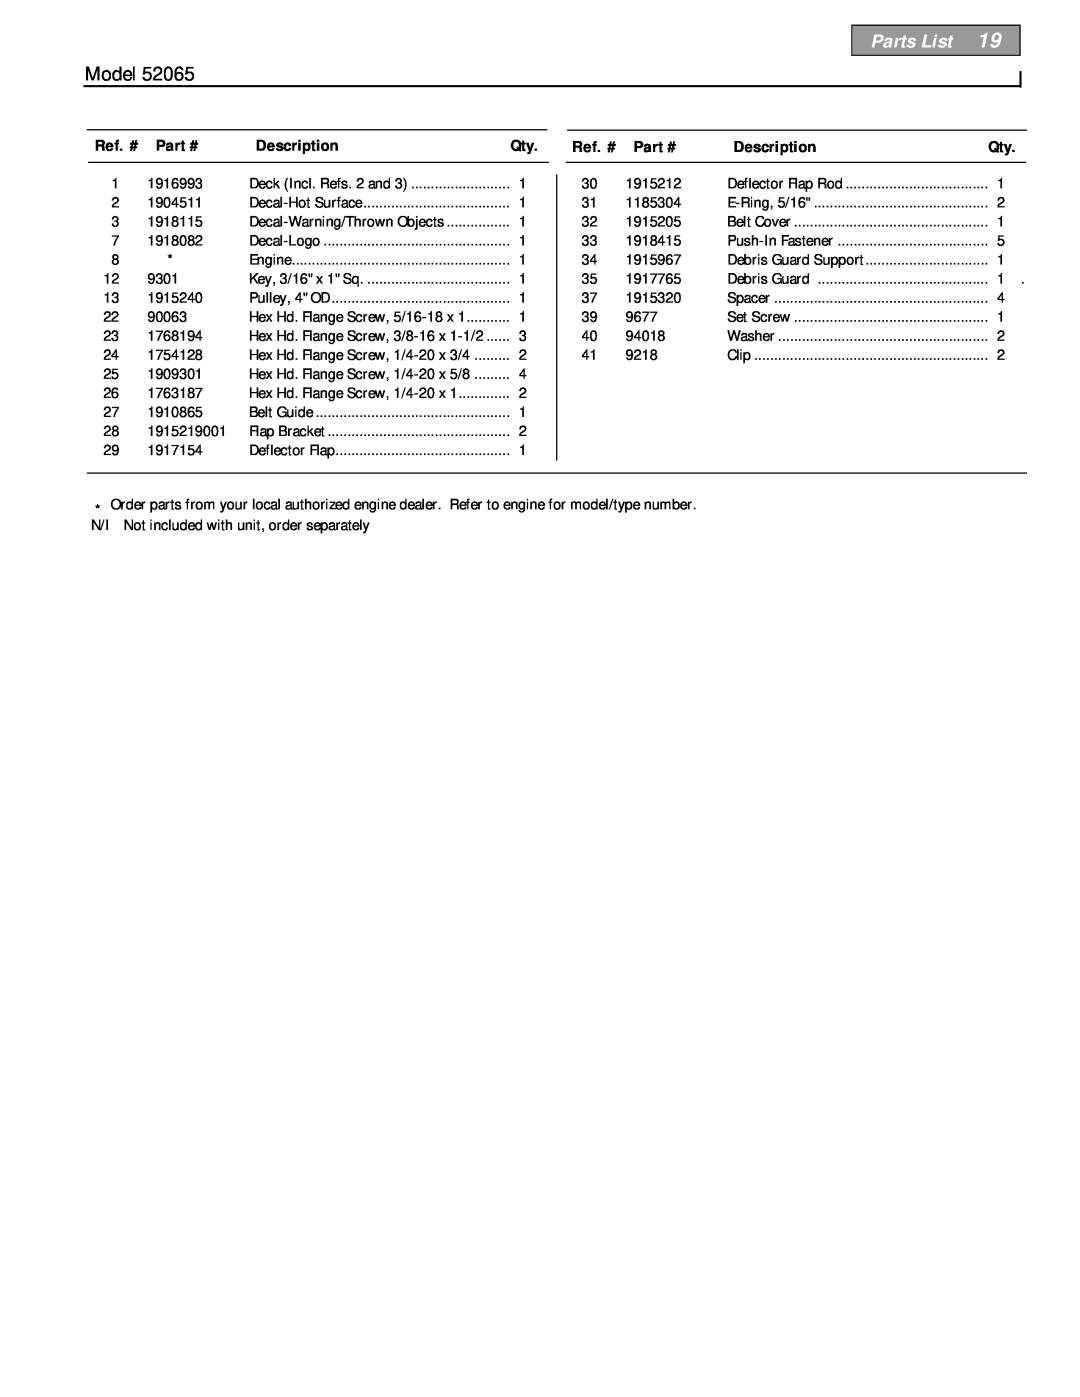 Troy-Bilt 52065 owner manual Parts List, Model, Ref. #, Description 